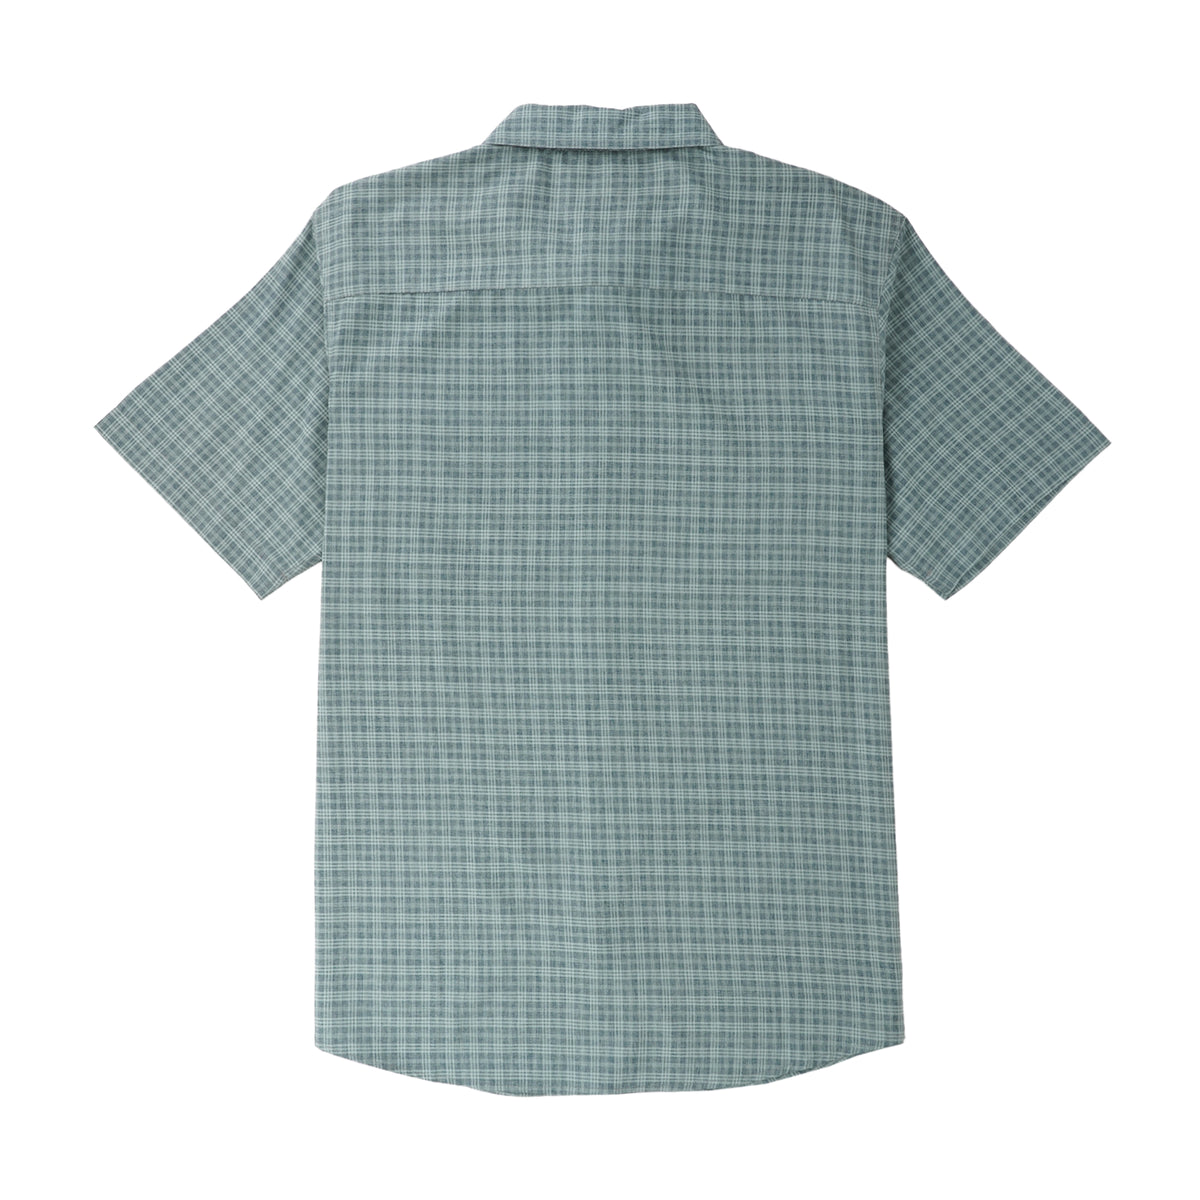 AFTCO Dorsal Short Sleeve Button Down Shirt